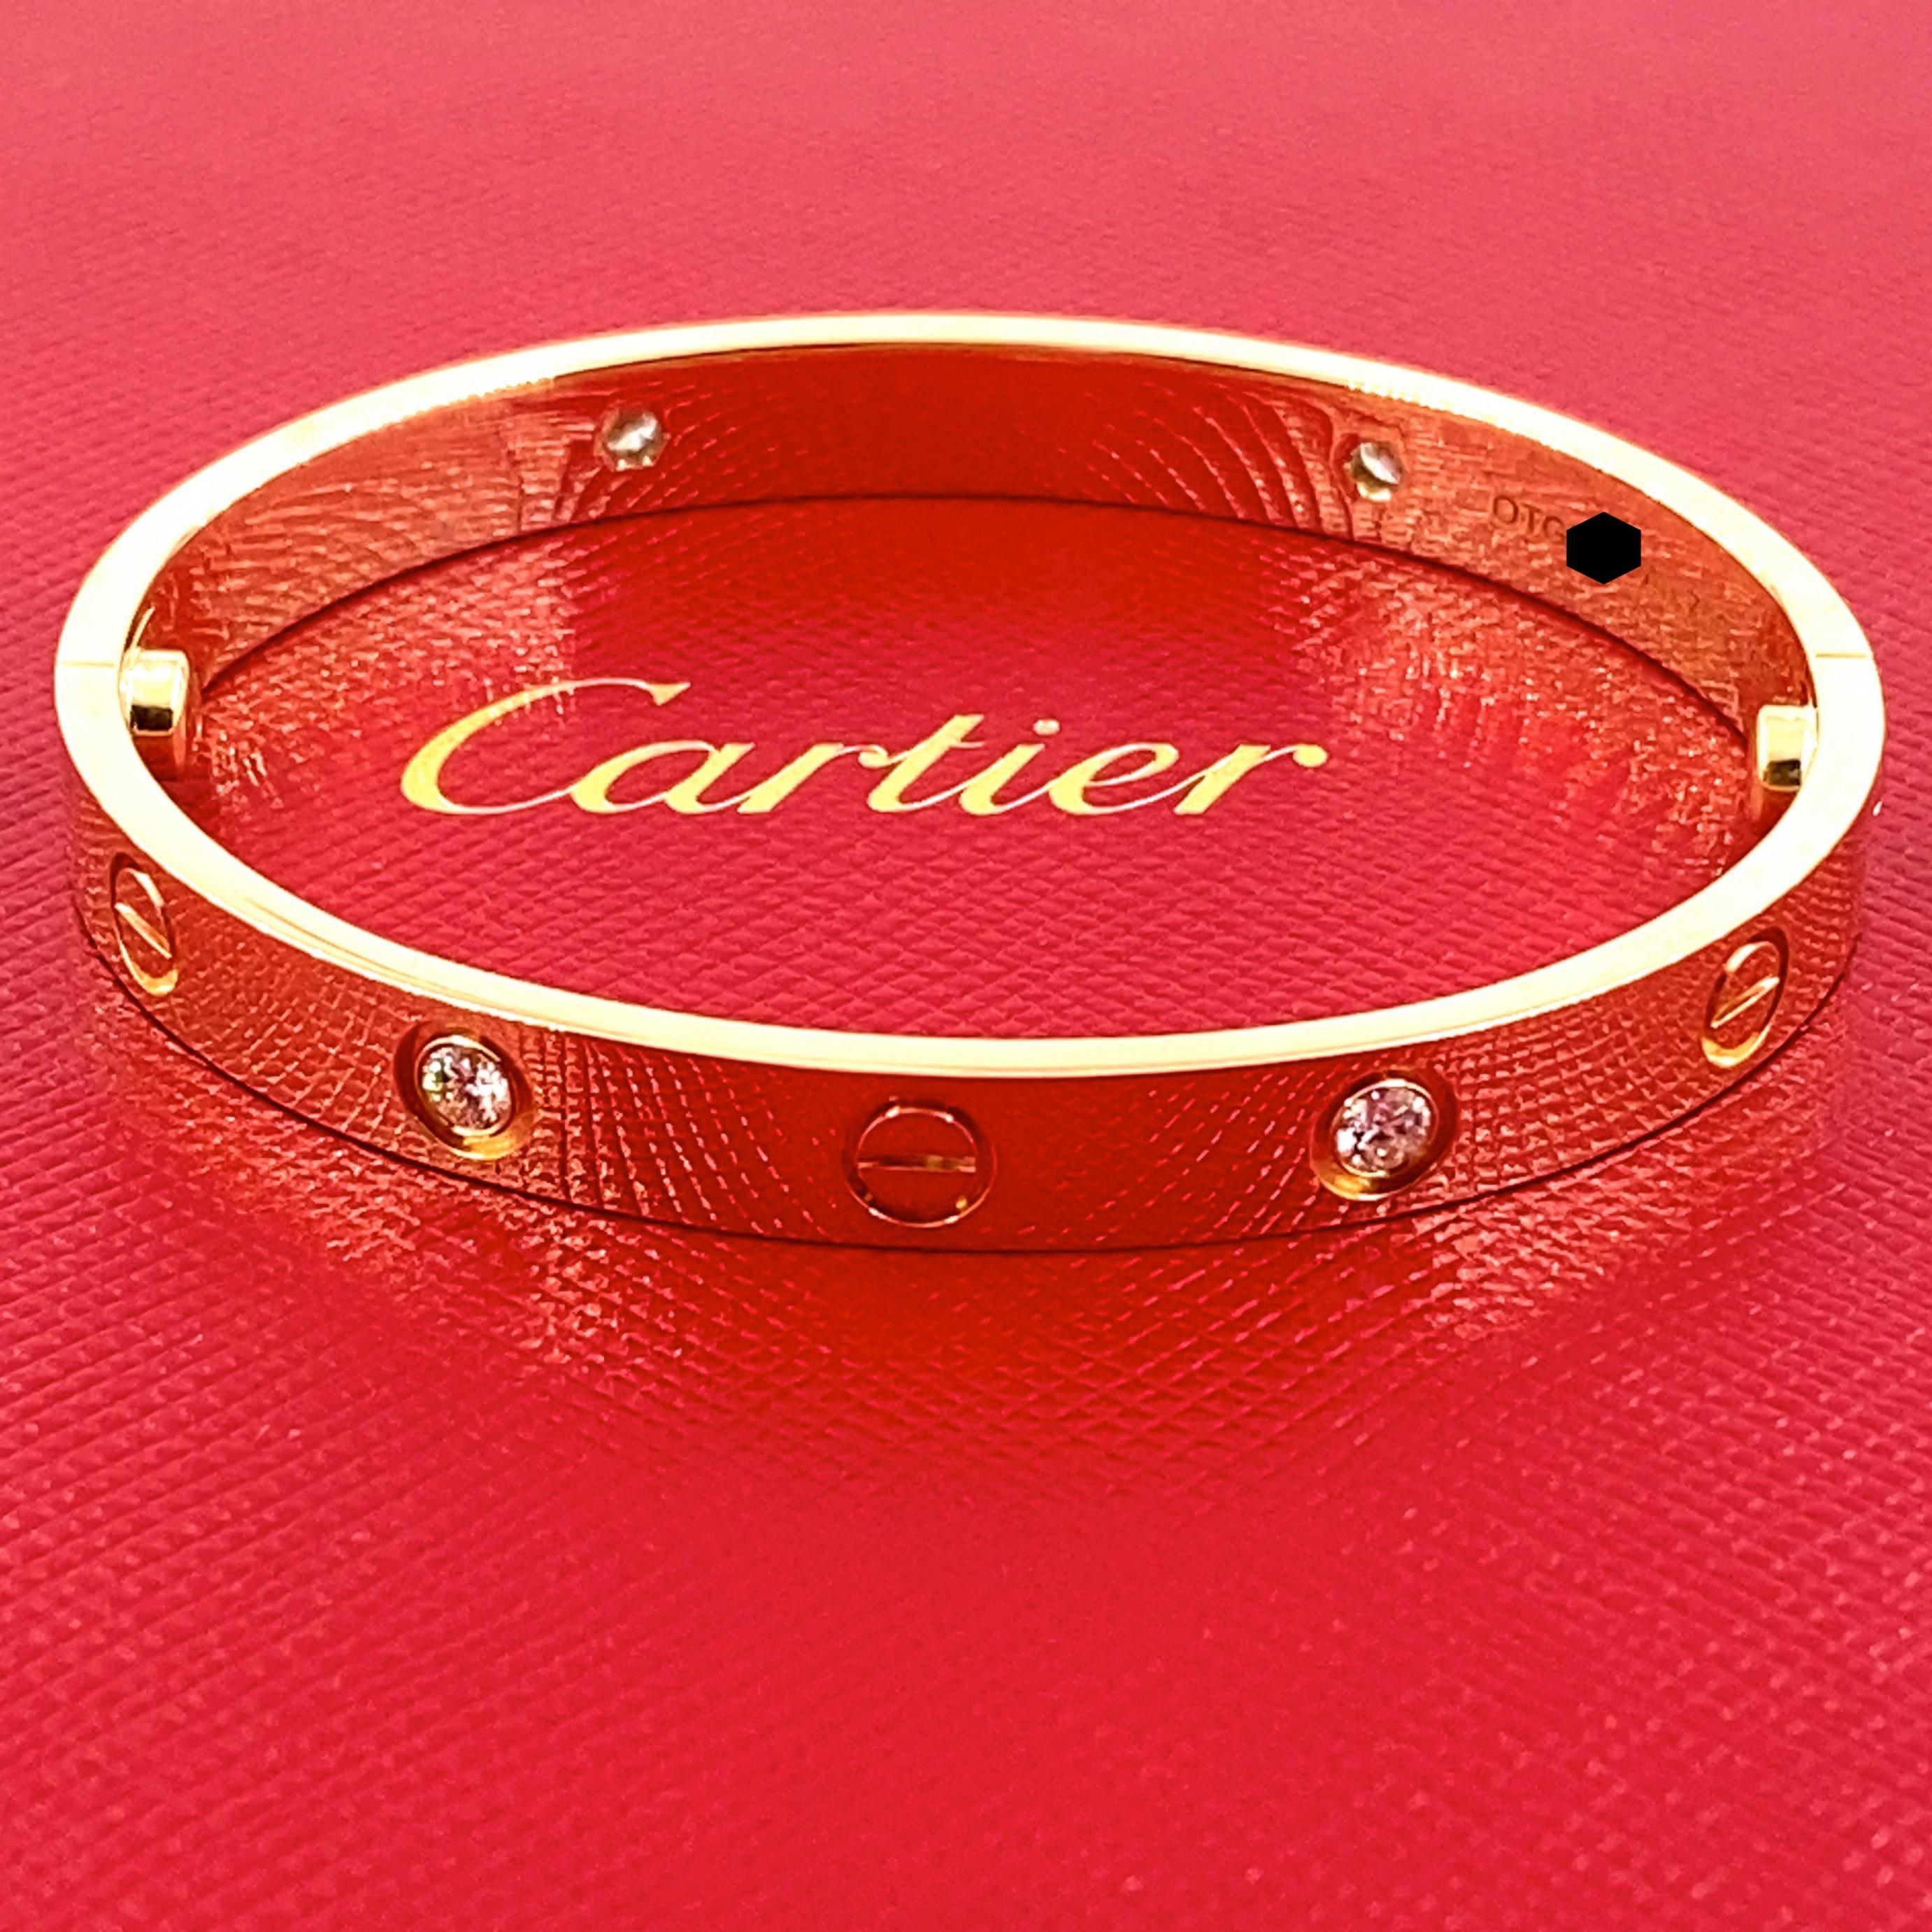 Cartier 4 Diamond Love Bangle Bracelet with Box 18kt Yellow Gold SZ 16 For Sale 1